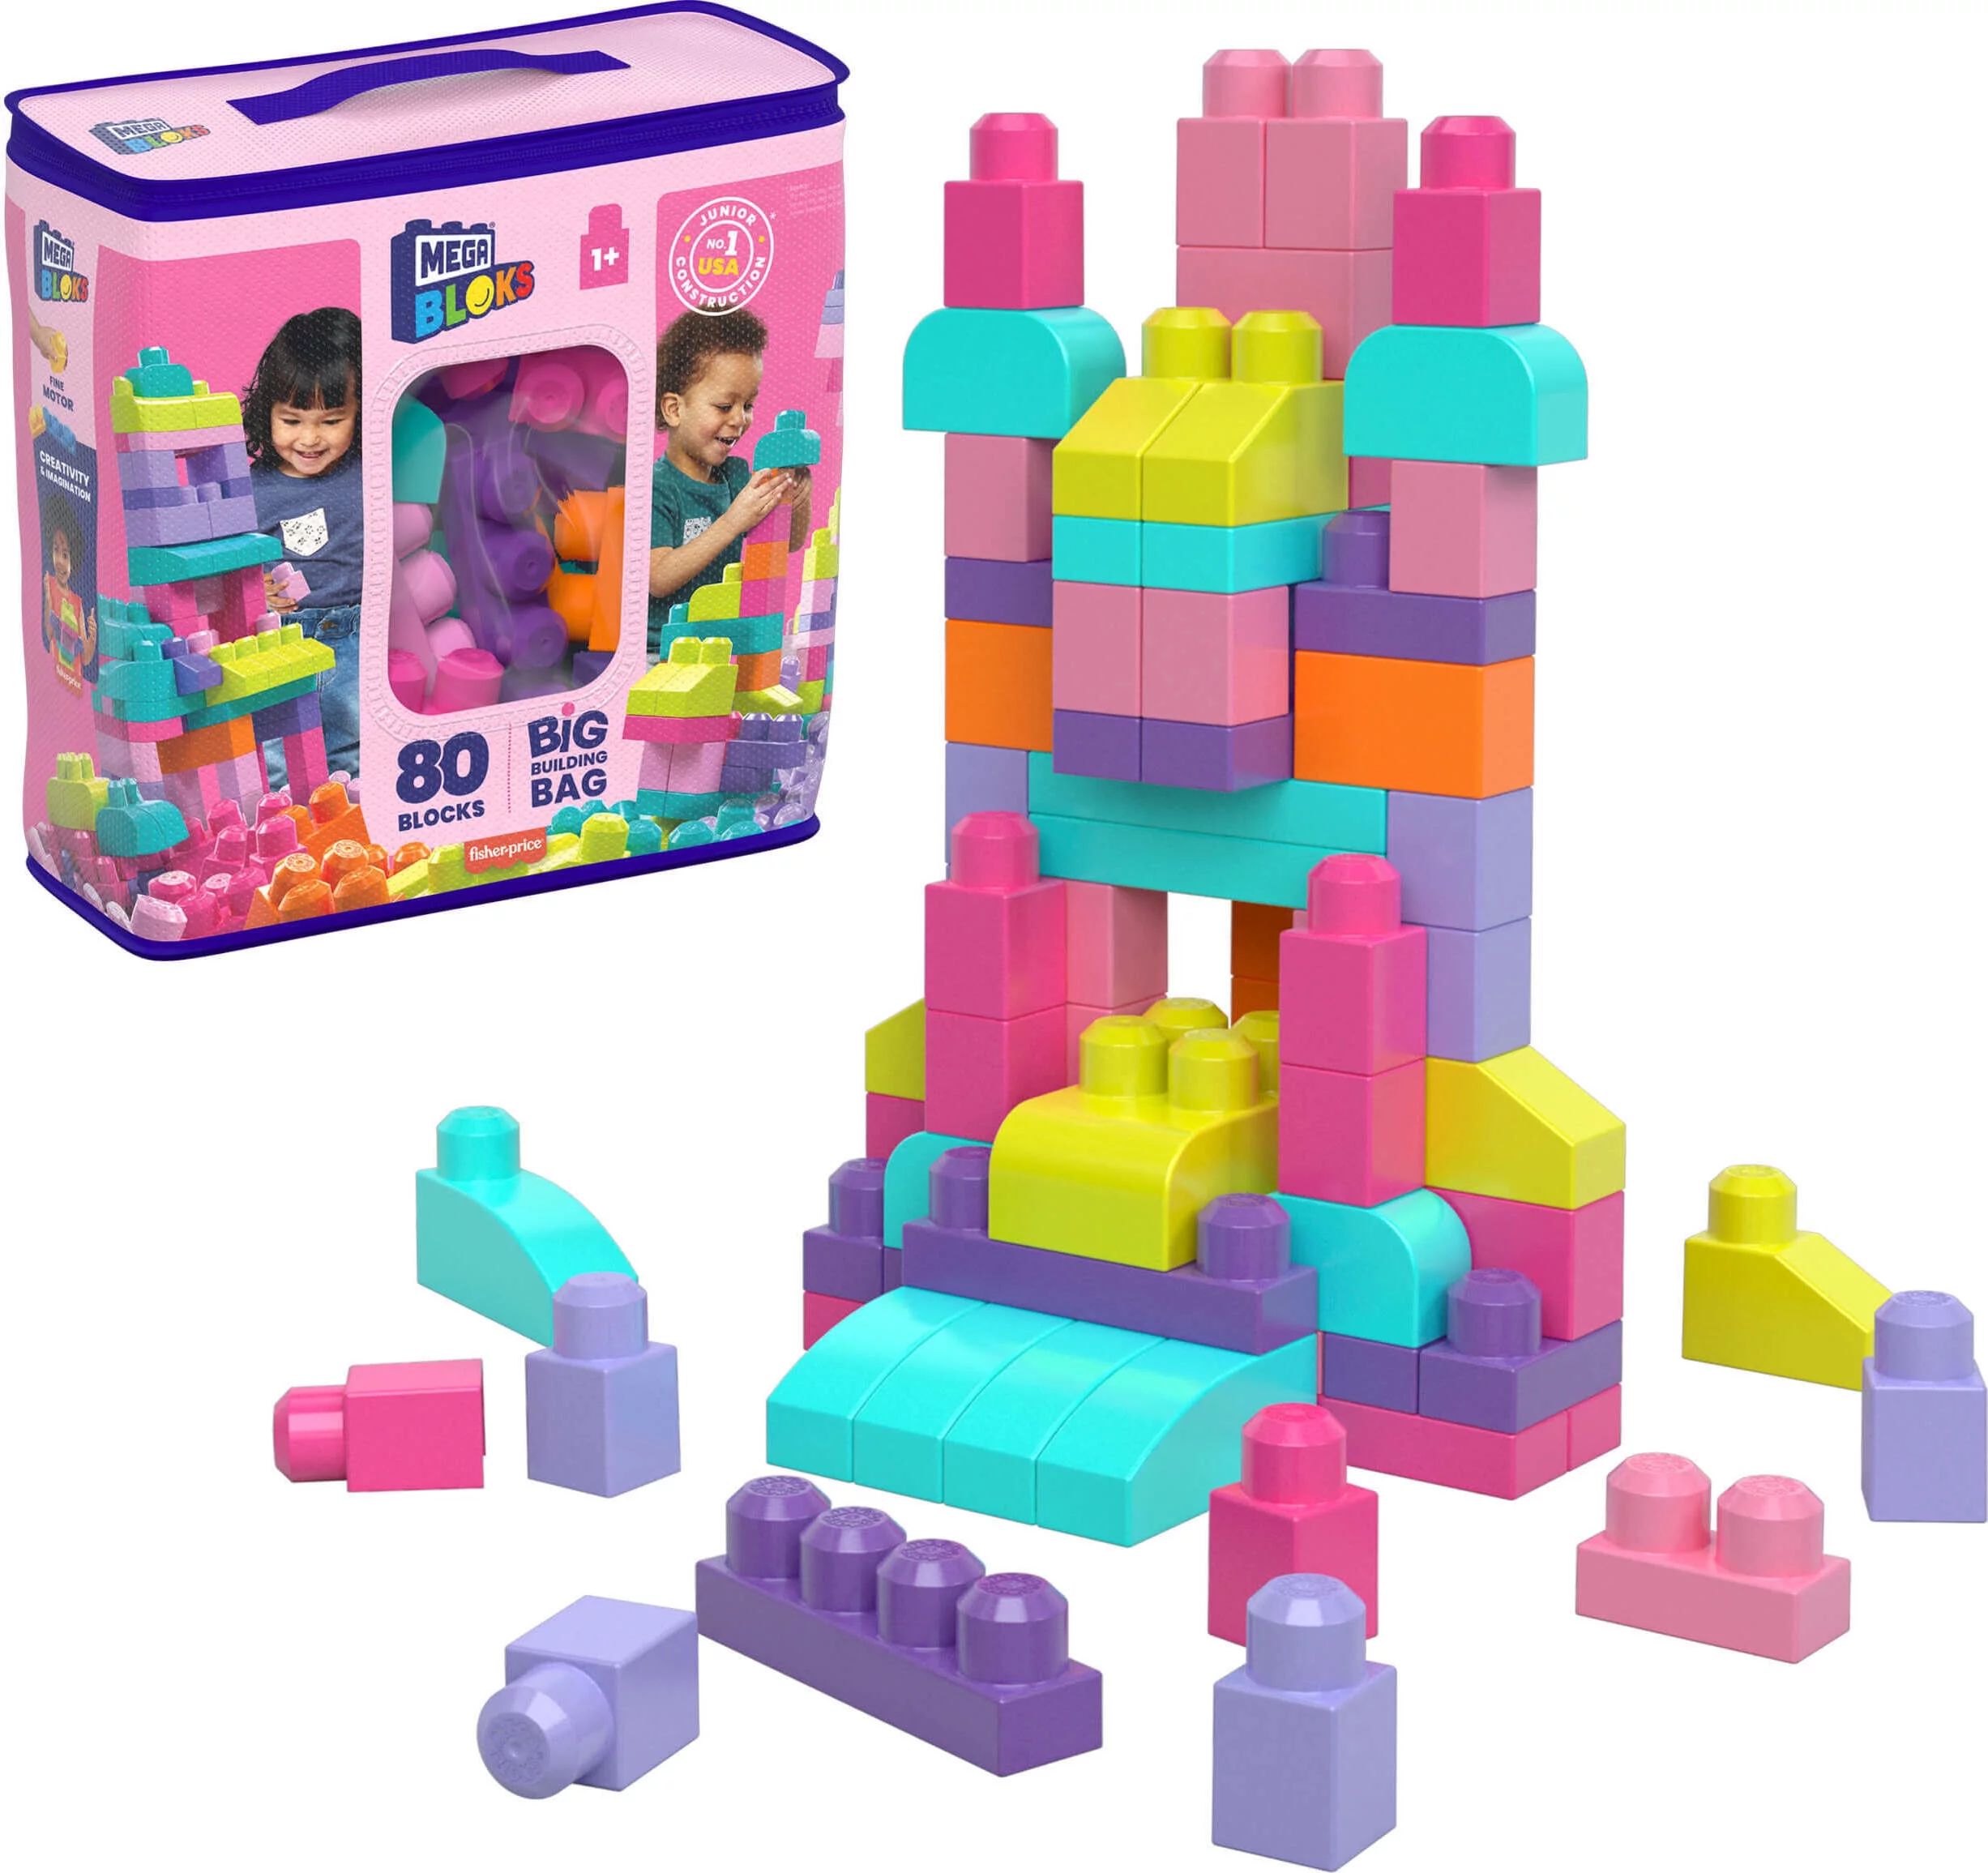 MEGA BLOKS Fisher-Price Toy Blocks Pink Big Building Bag With Storage (80 Pieces) For Toddler | Walmart (US)